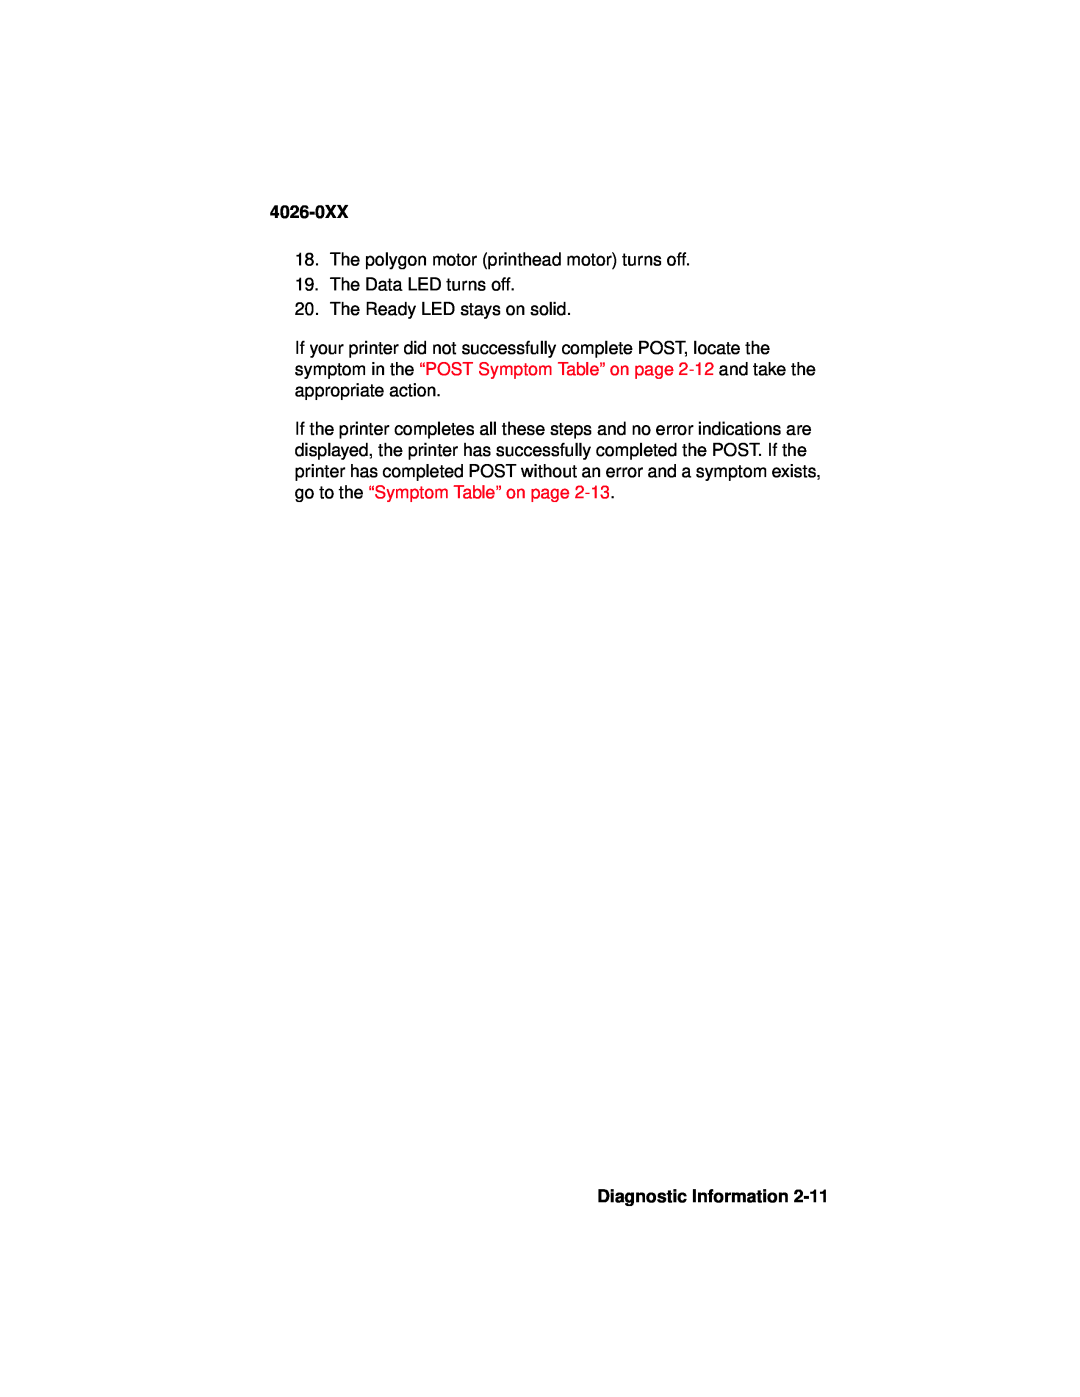 Lexmark 4026-0XX manual The polygon motor printhead motor turns off, Diagnostic Information 